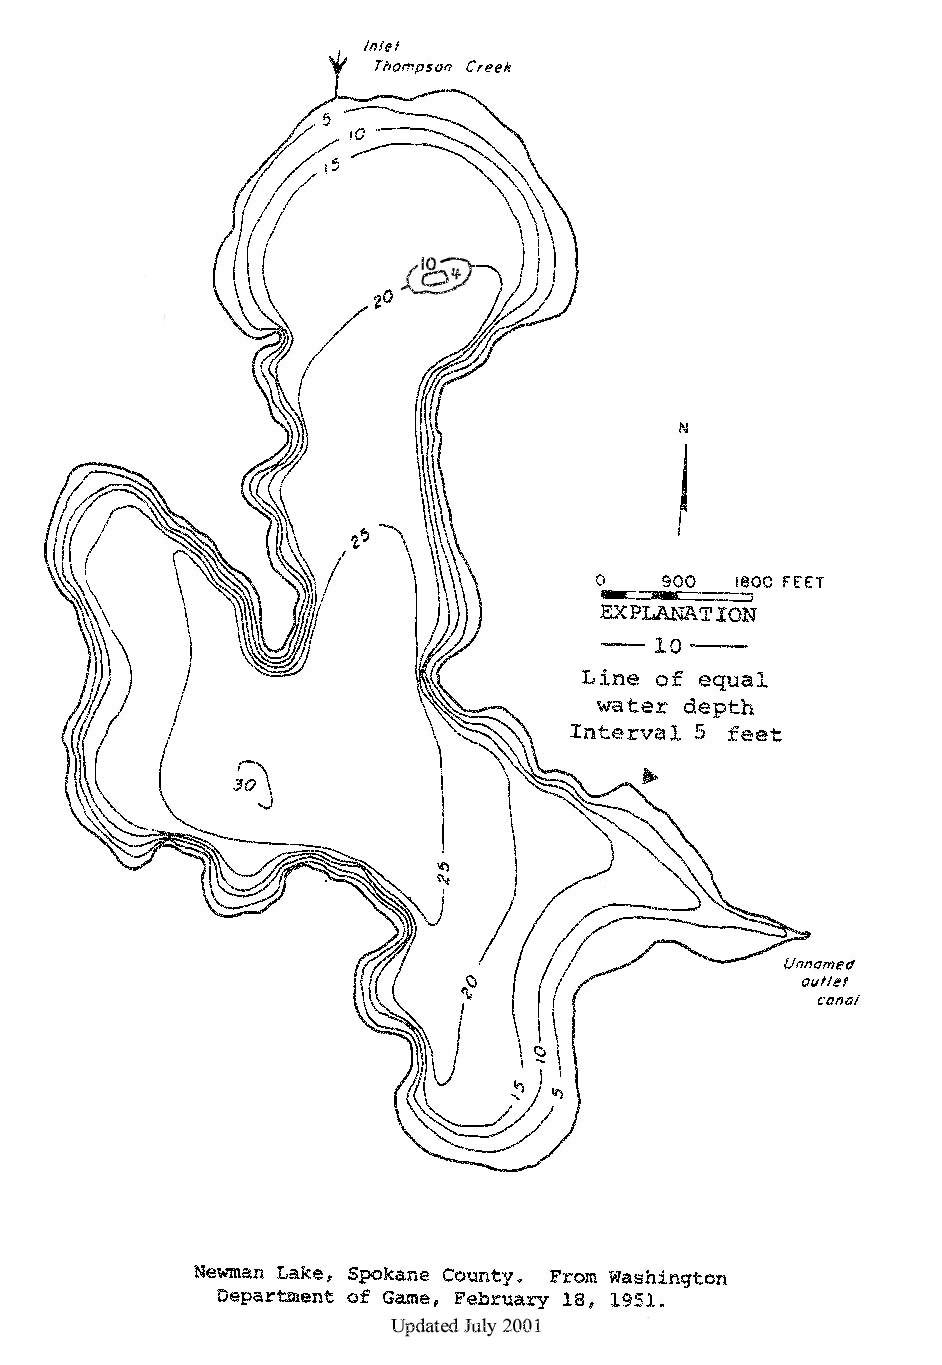 Old Newman Lake depth map